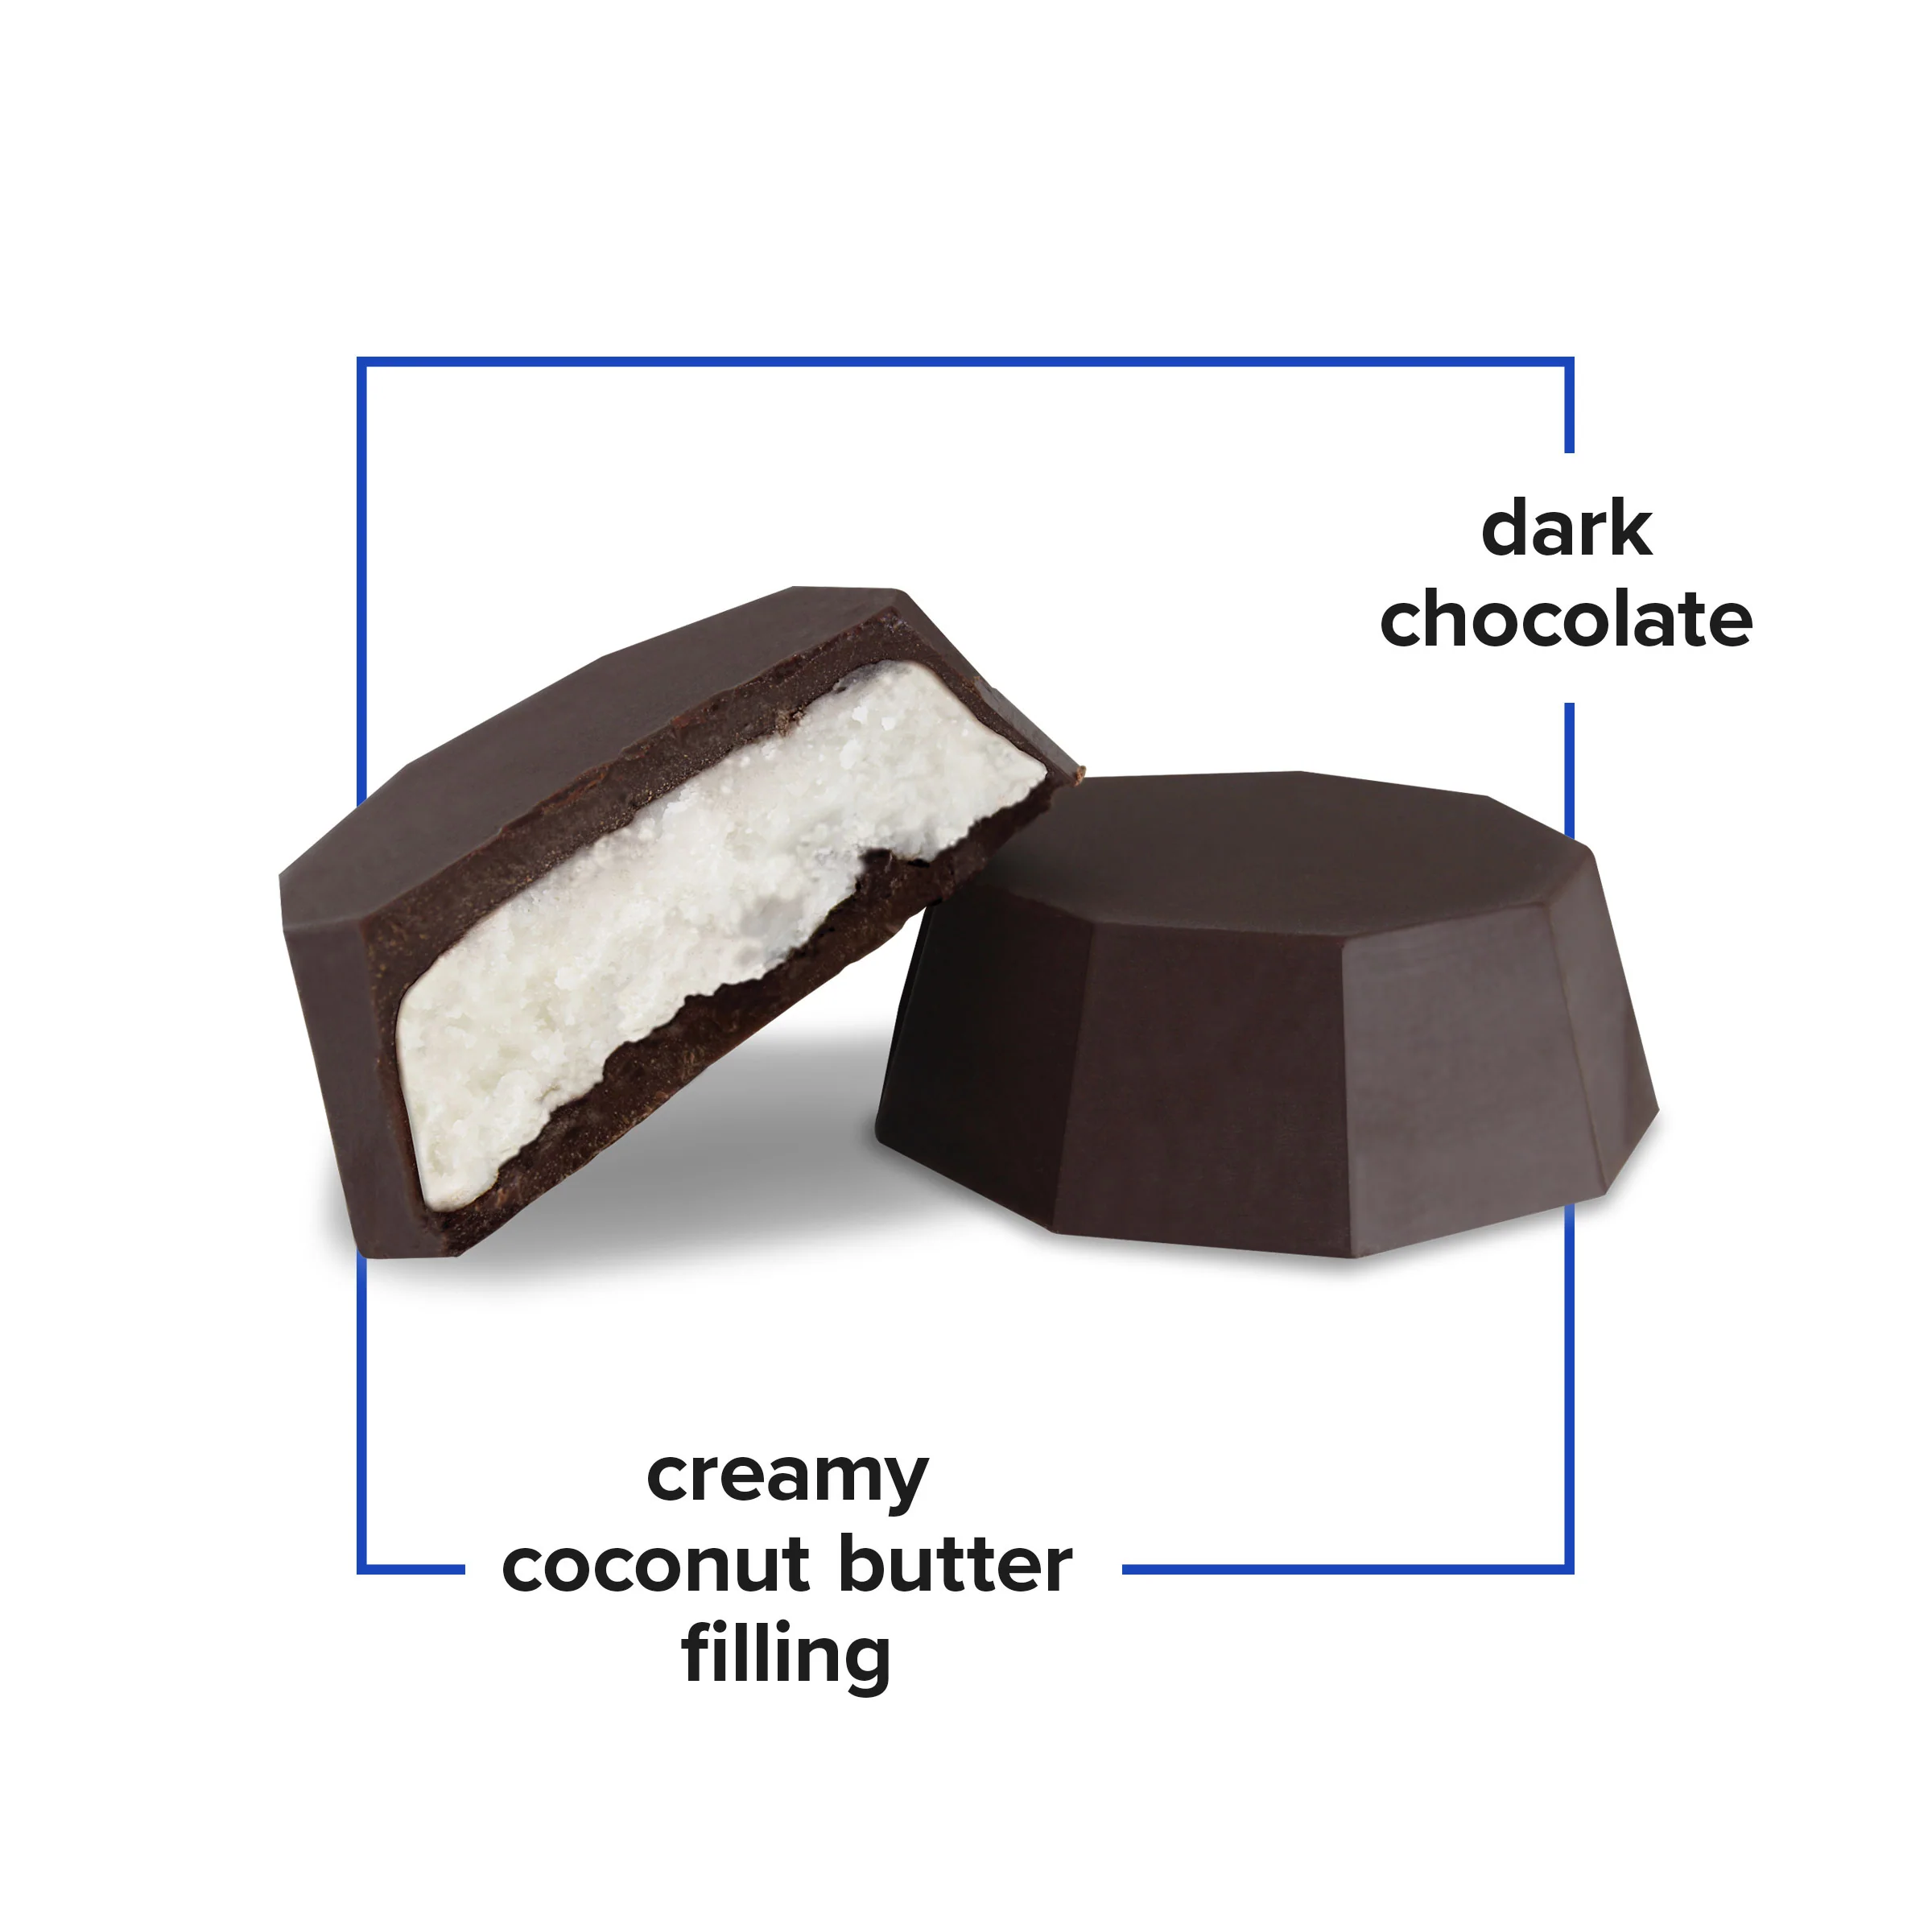 FÄV Milk Chocolate Peanut Butter Cups with Enhanced Collagen